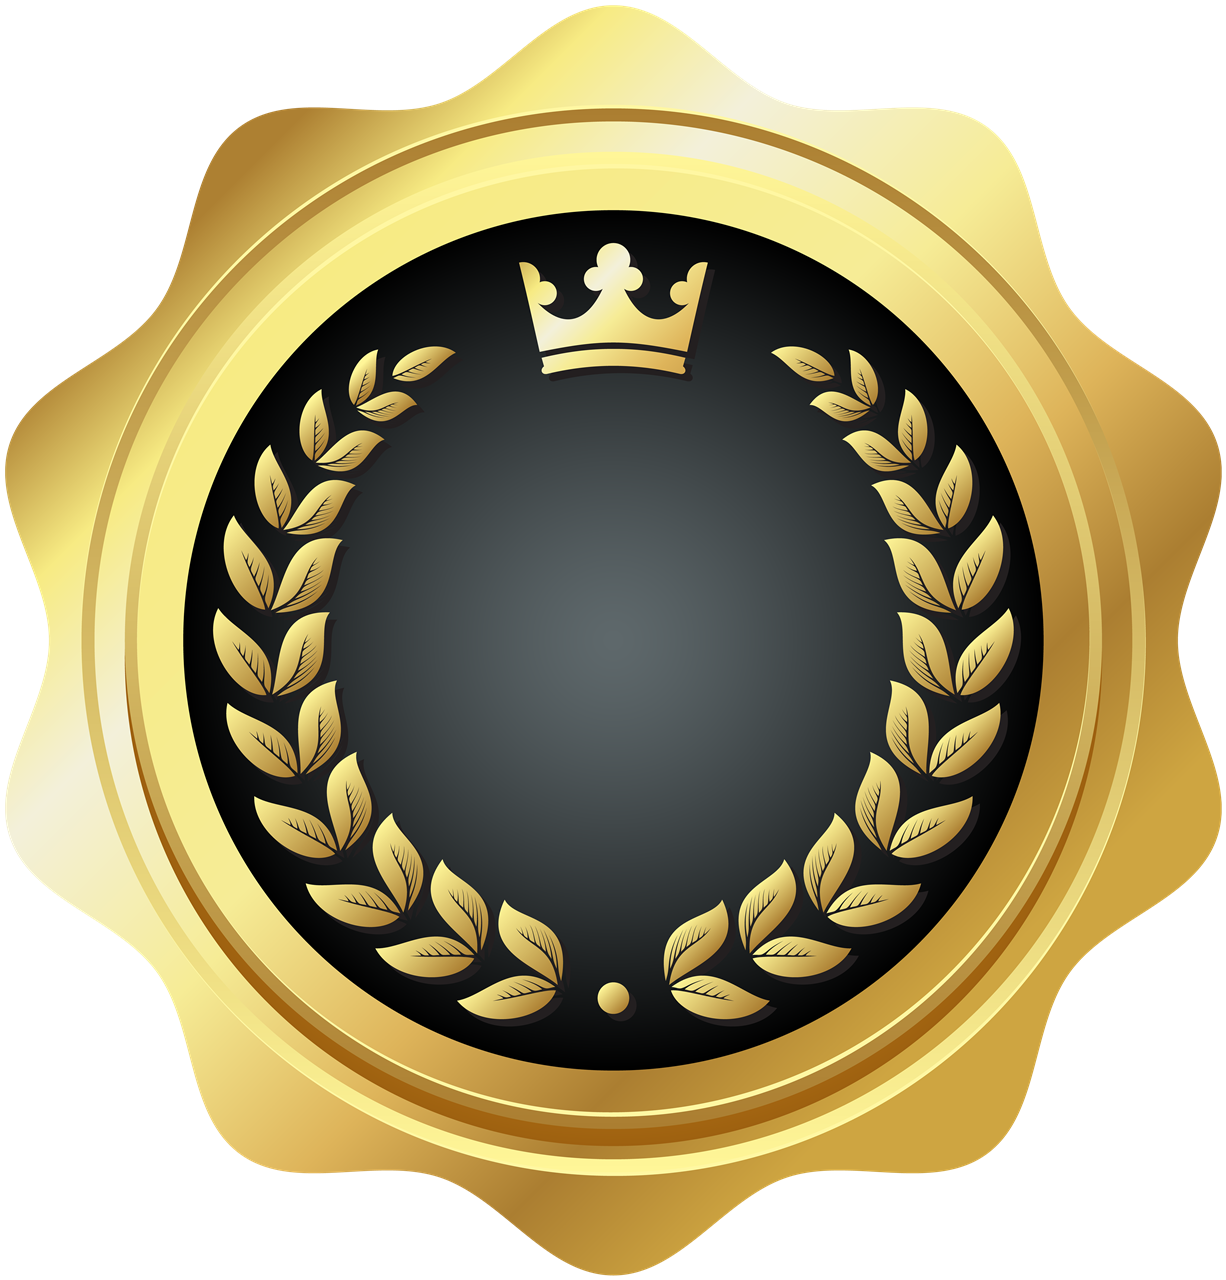 Golden Badge Free PNG Image